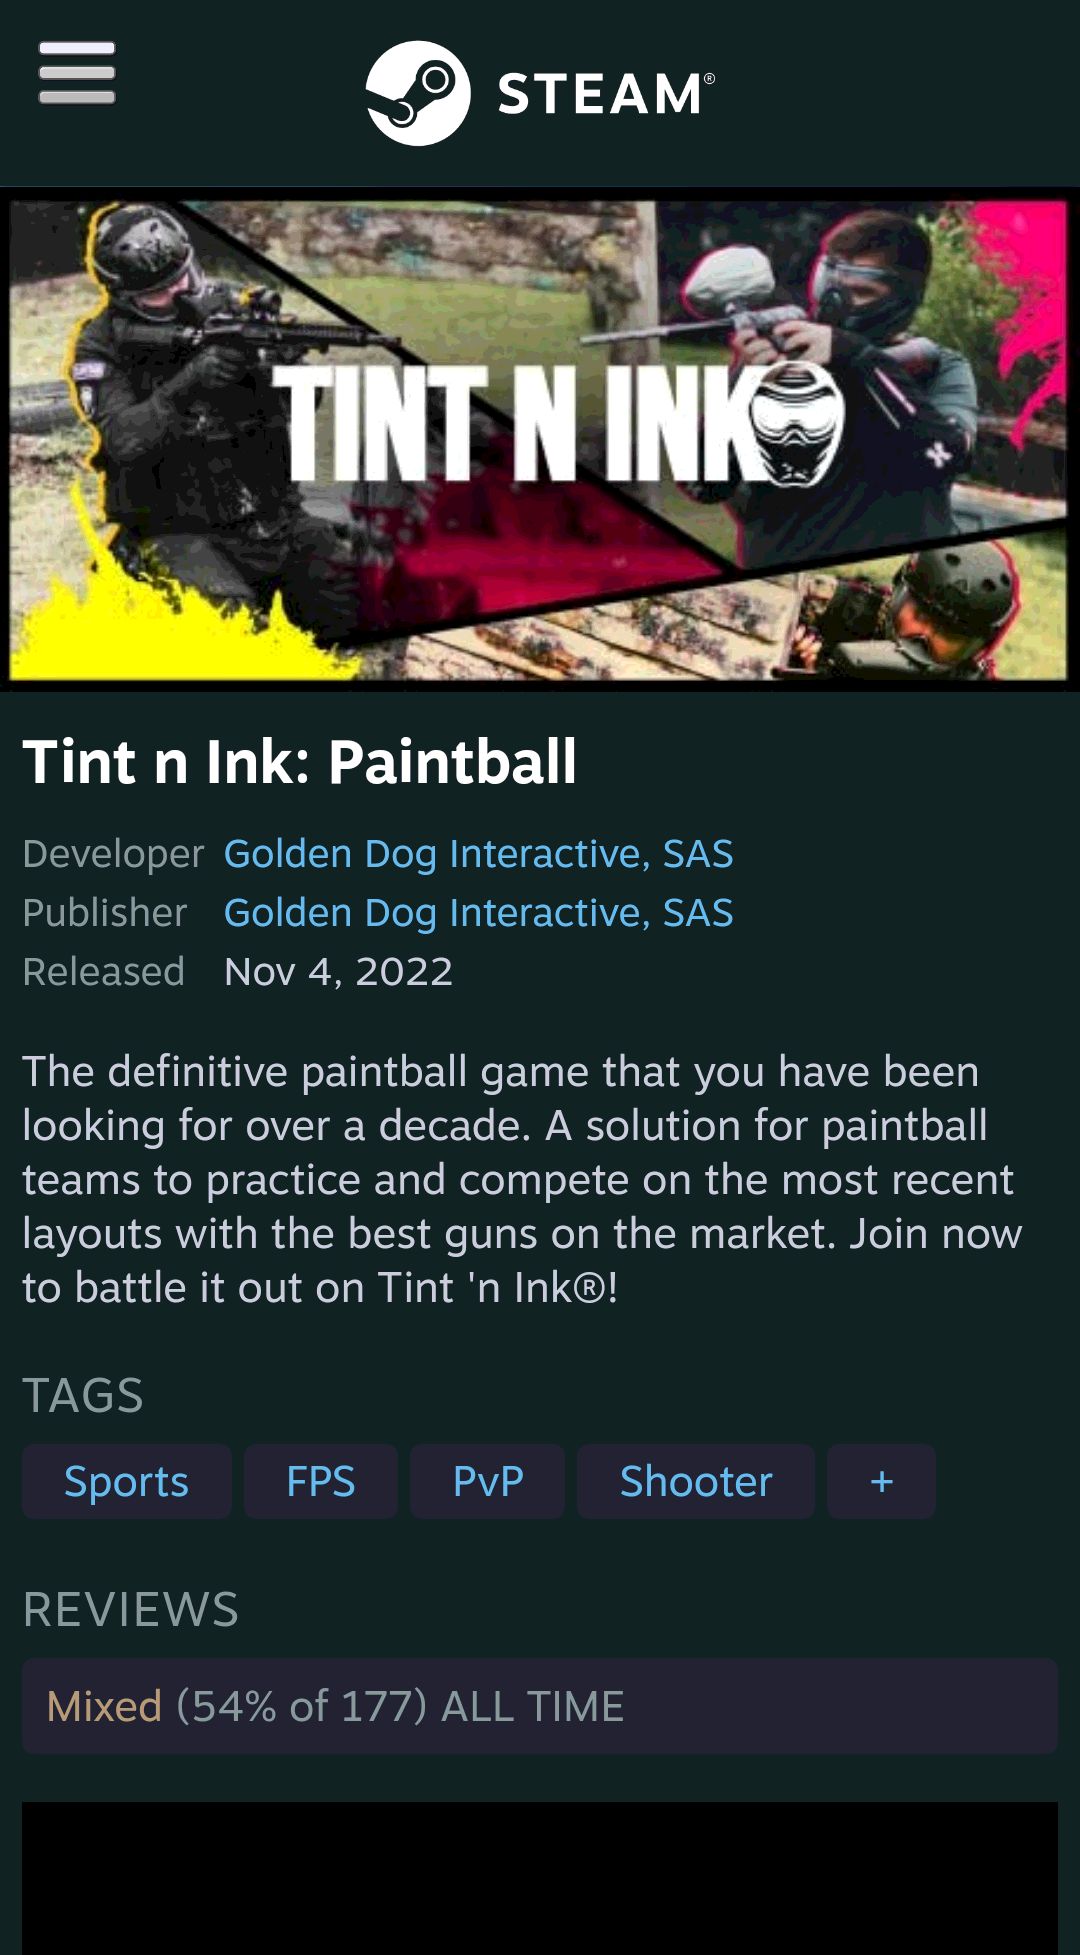 Tint n Ink: Paintball on Steam喜加一